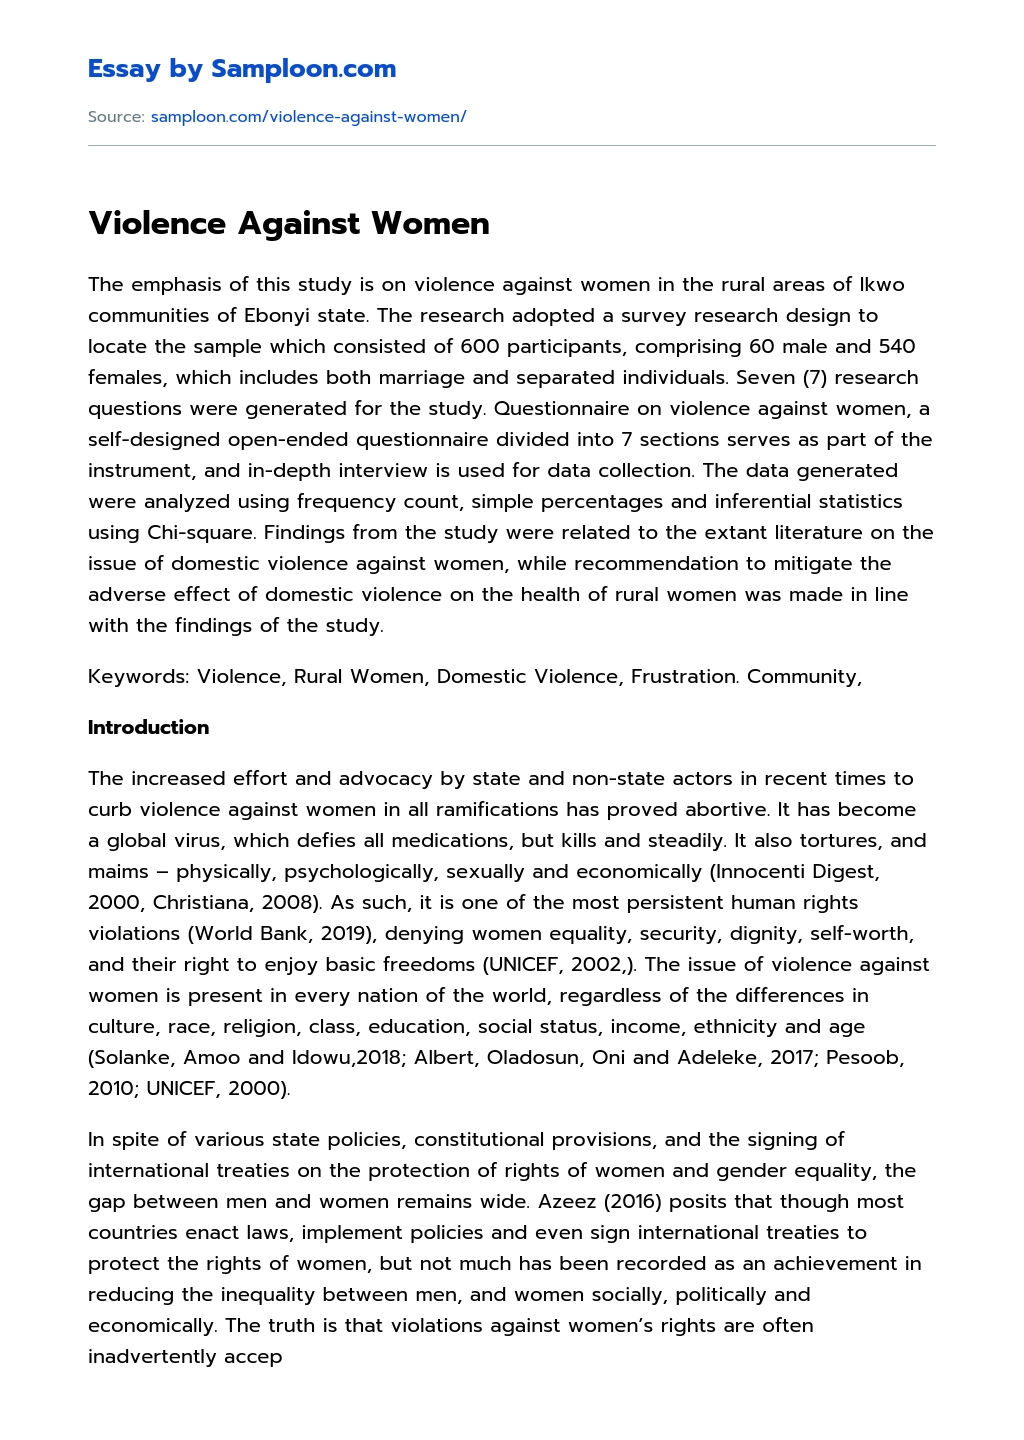 Violence Against Women essay